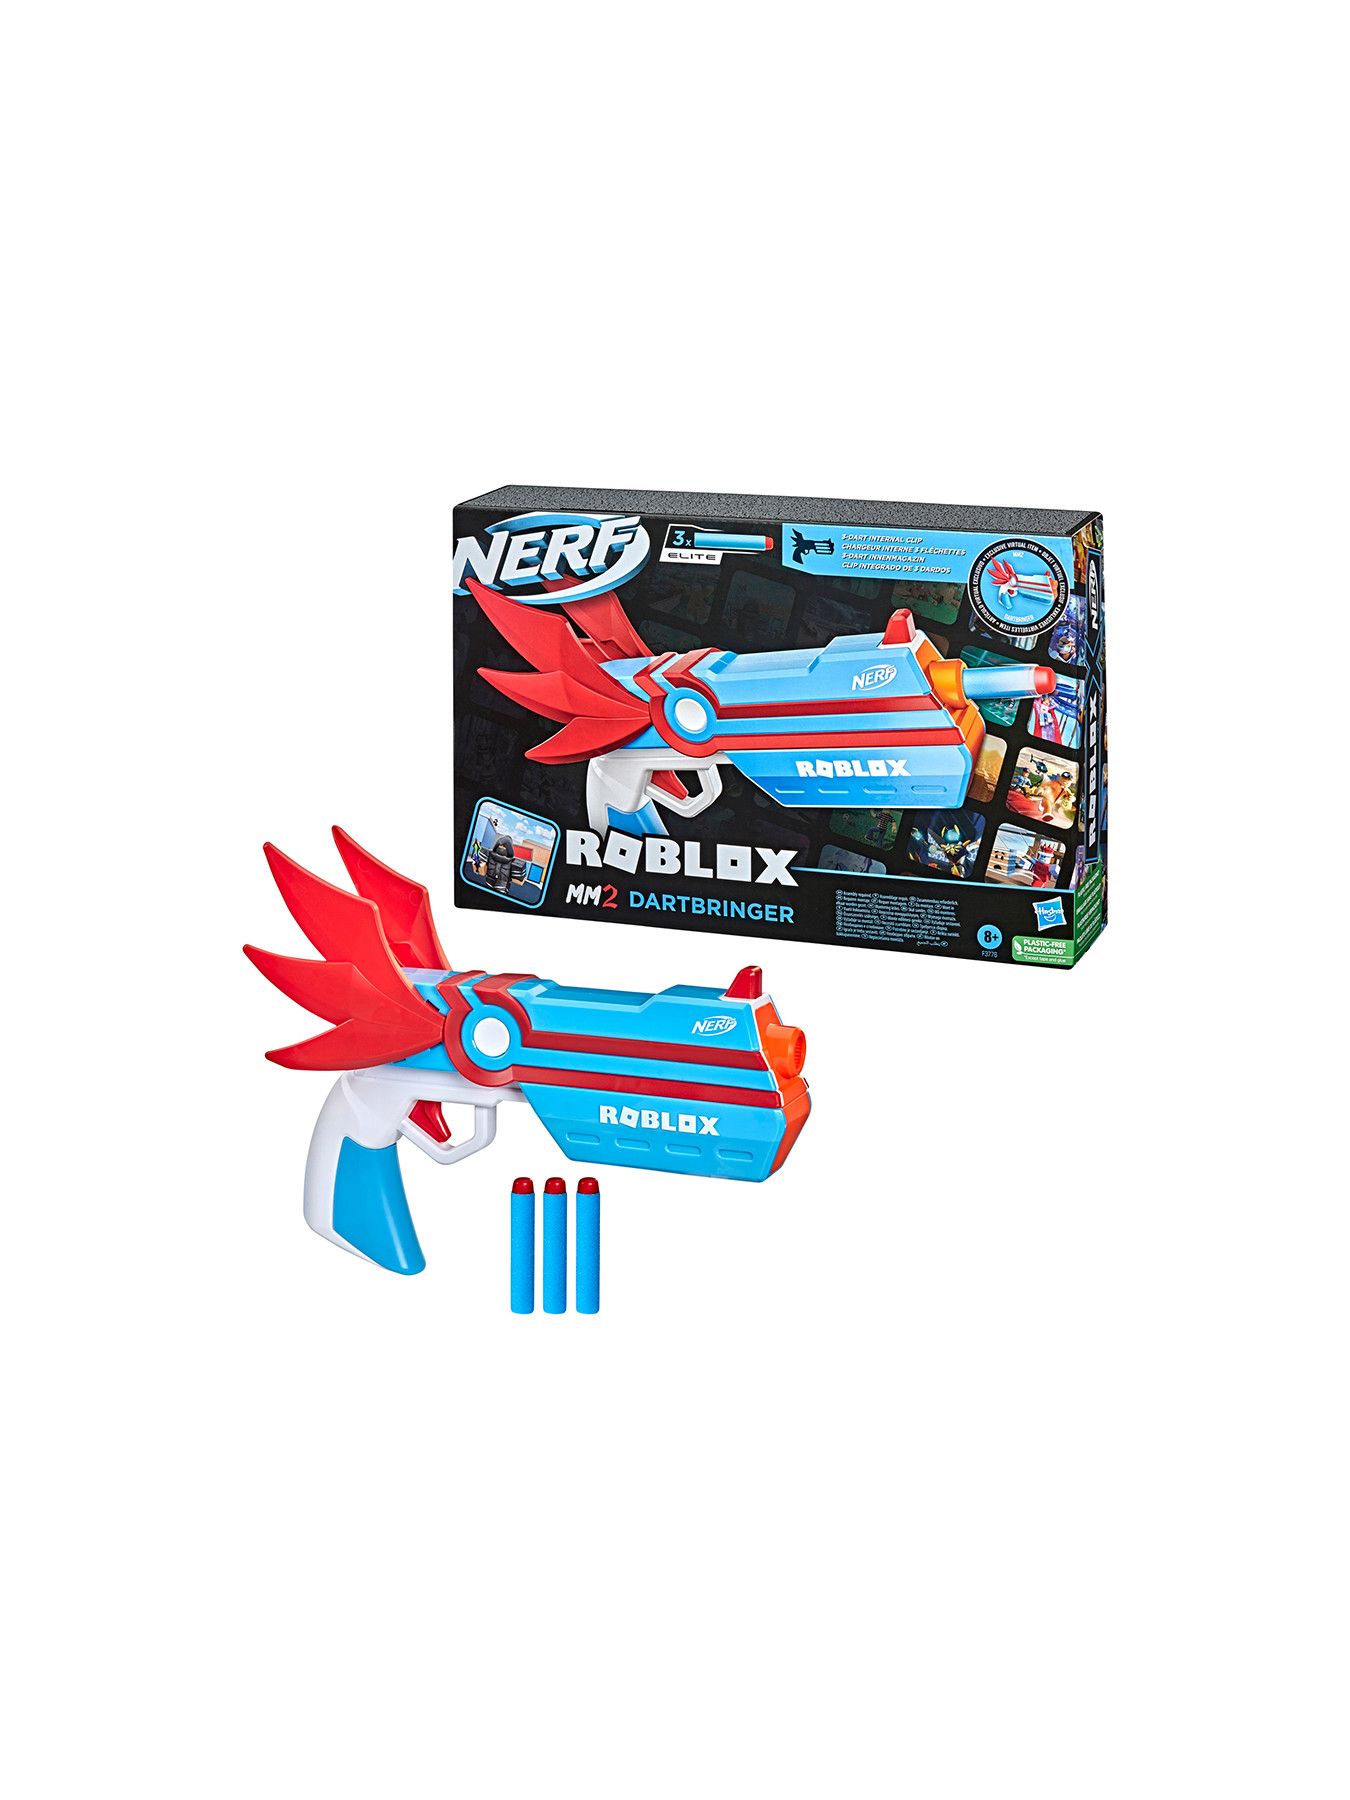 Nerf for Roblox MM2 Dartbringer Blaster Code Only New